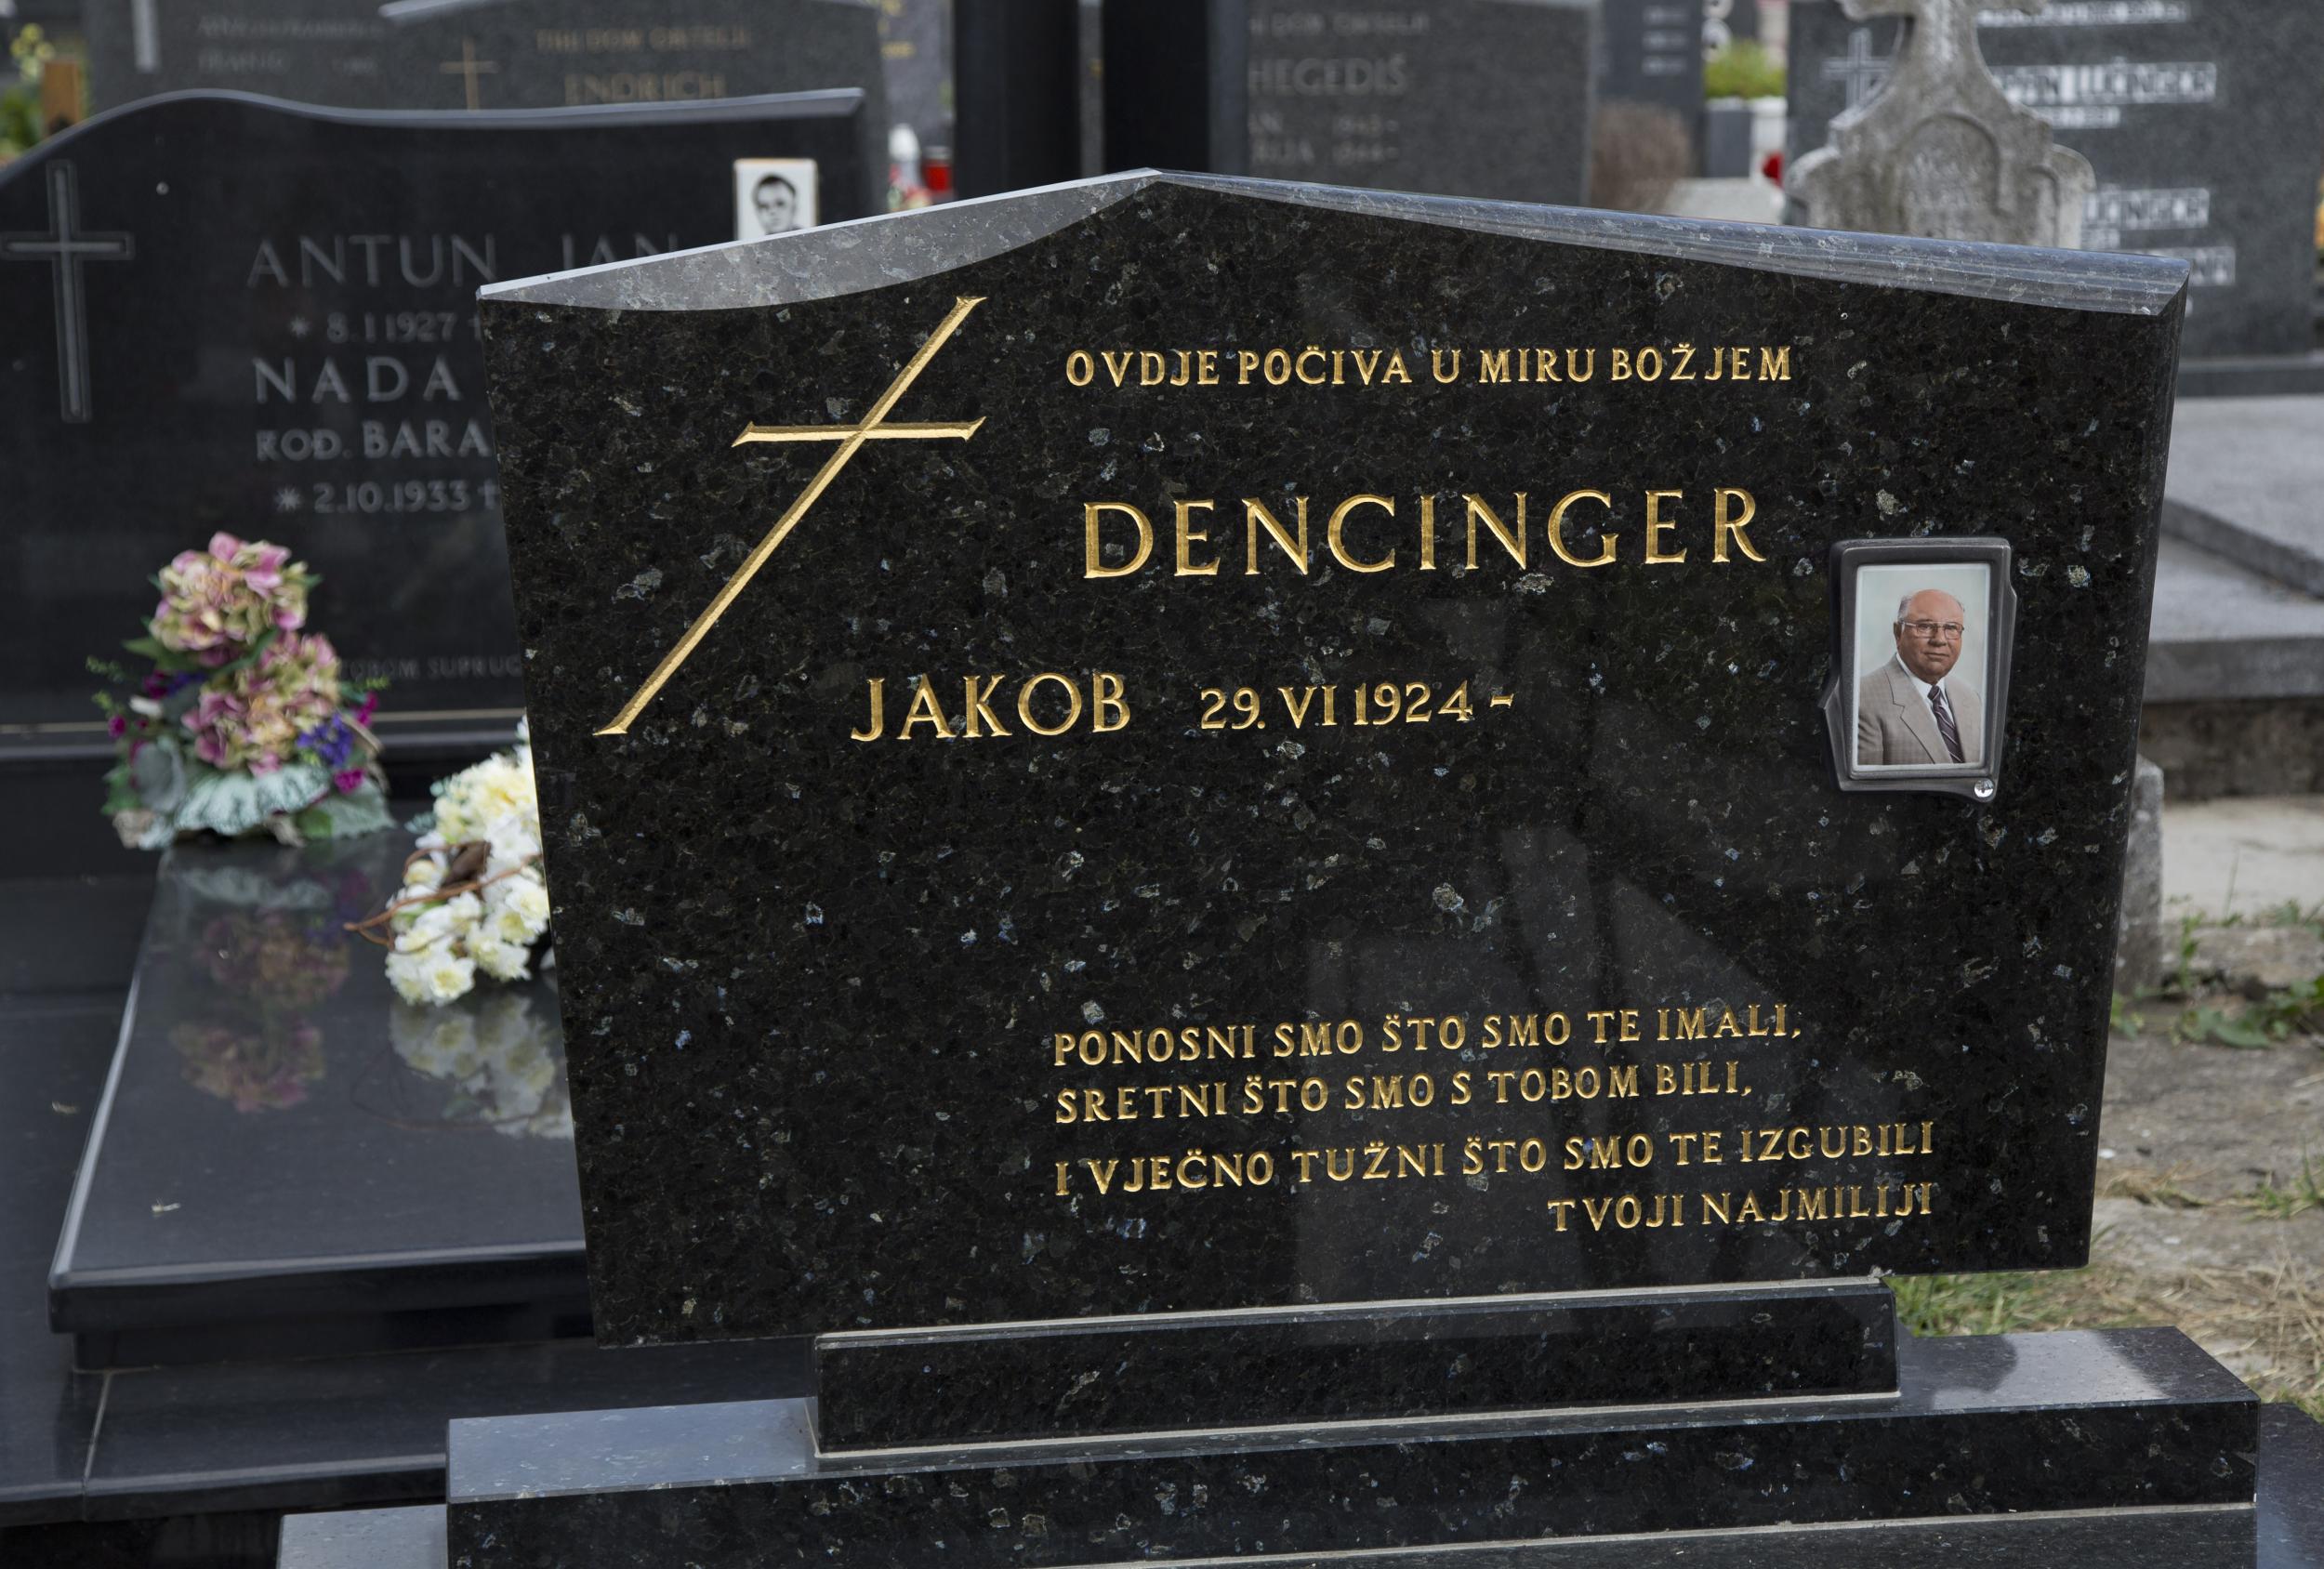 The grave of Jakob Dencinger in Croatia